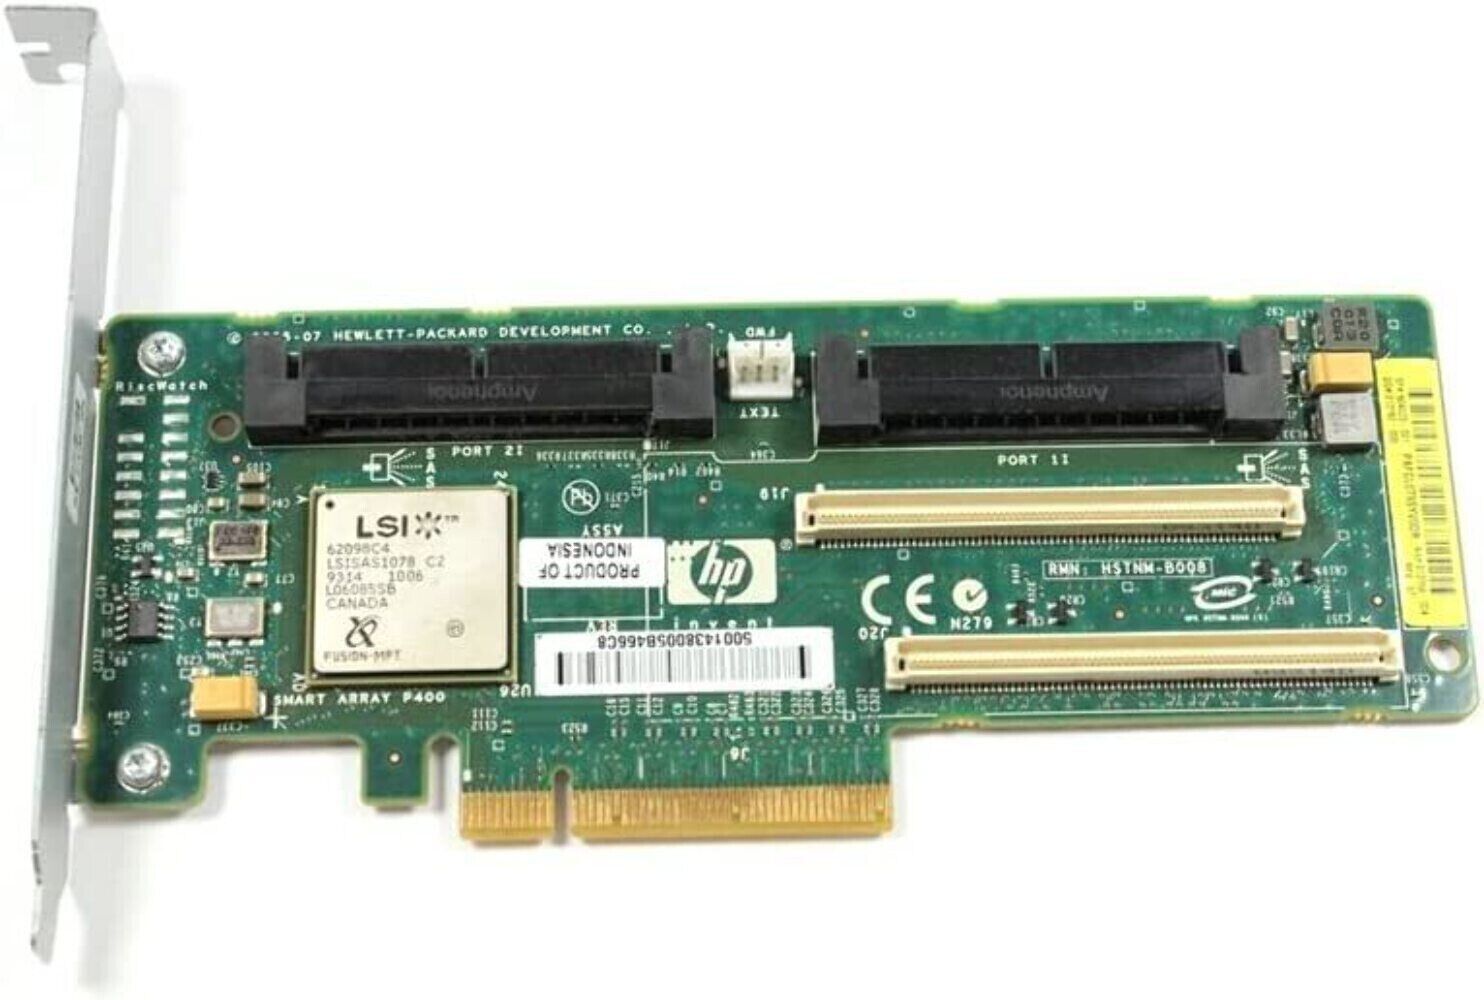 HP Smart Array P400 PCI-E SCSI SAS RAID Controller Card - 504023-001